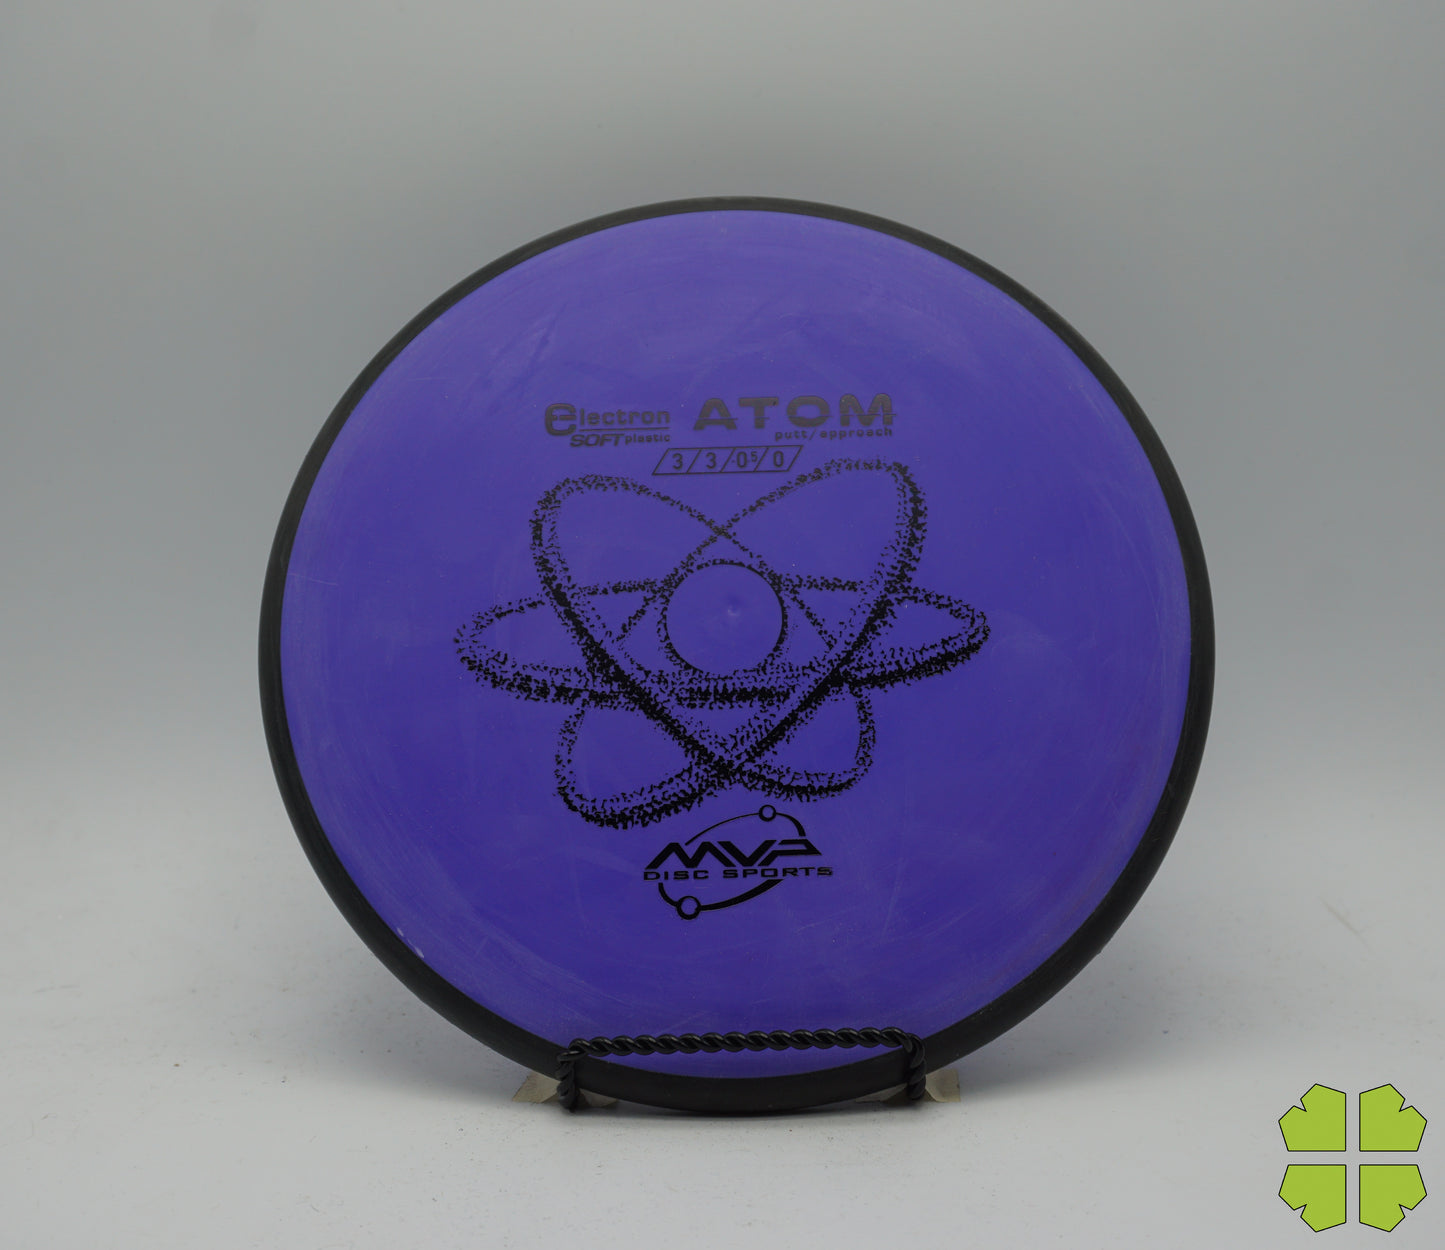 Electron Soft Atom